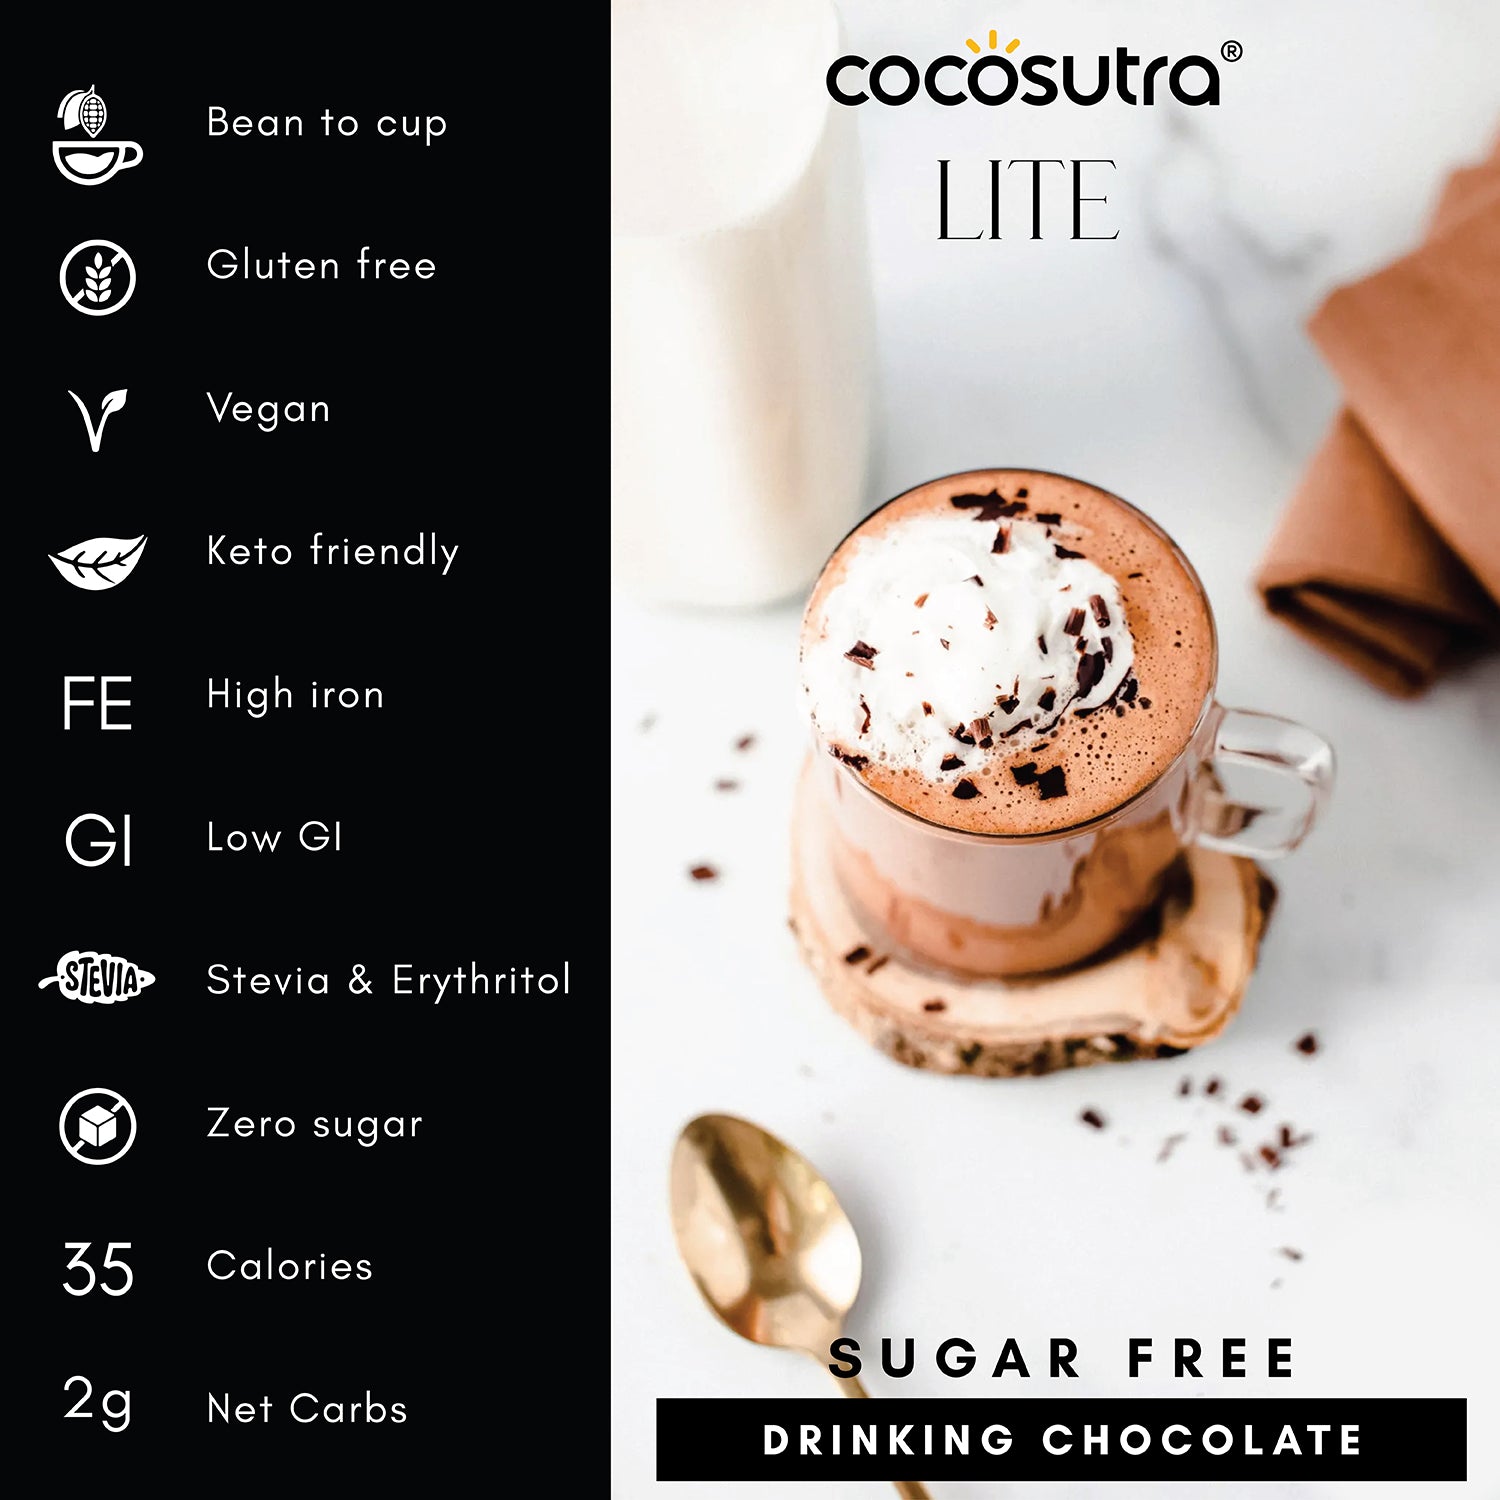 Cocosutra LITE Functional Sugar Free Drinking Chocolate Hamper - Benefits